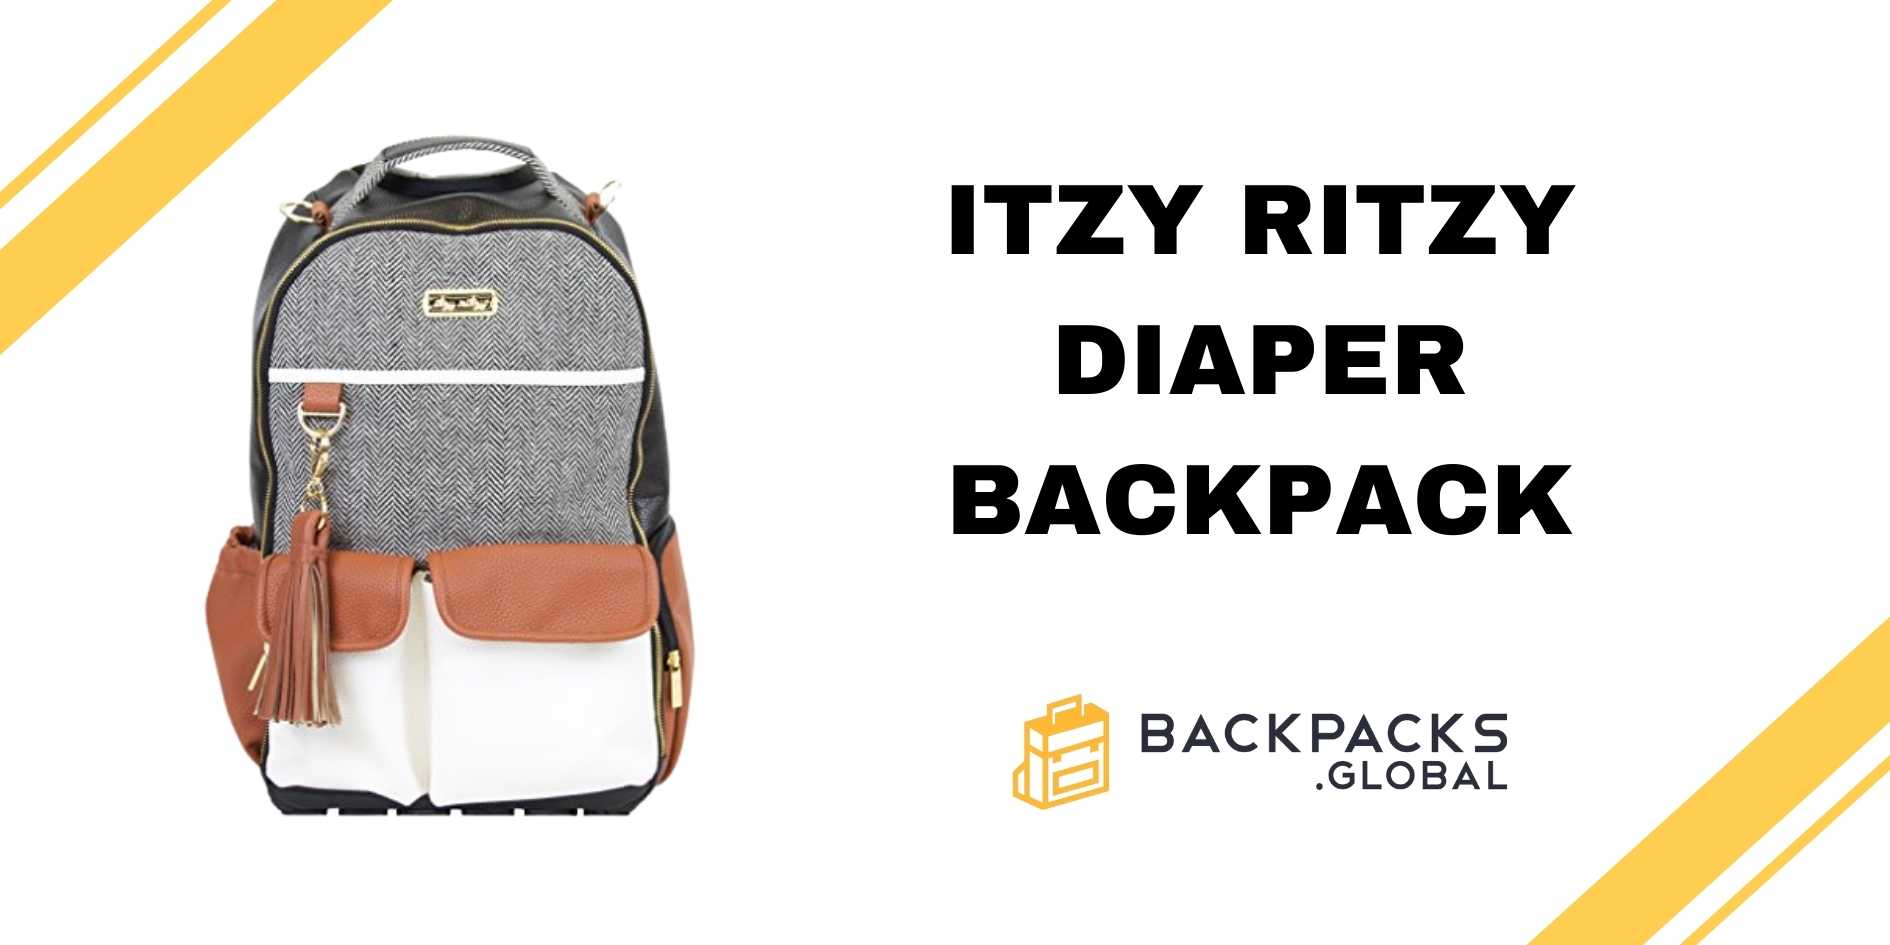 Itzy Ritzy Diaper Backpack